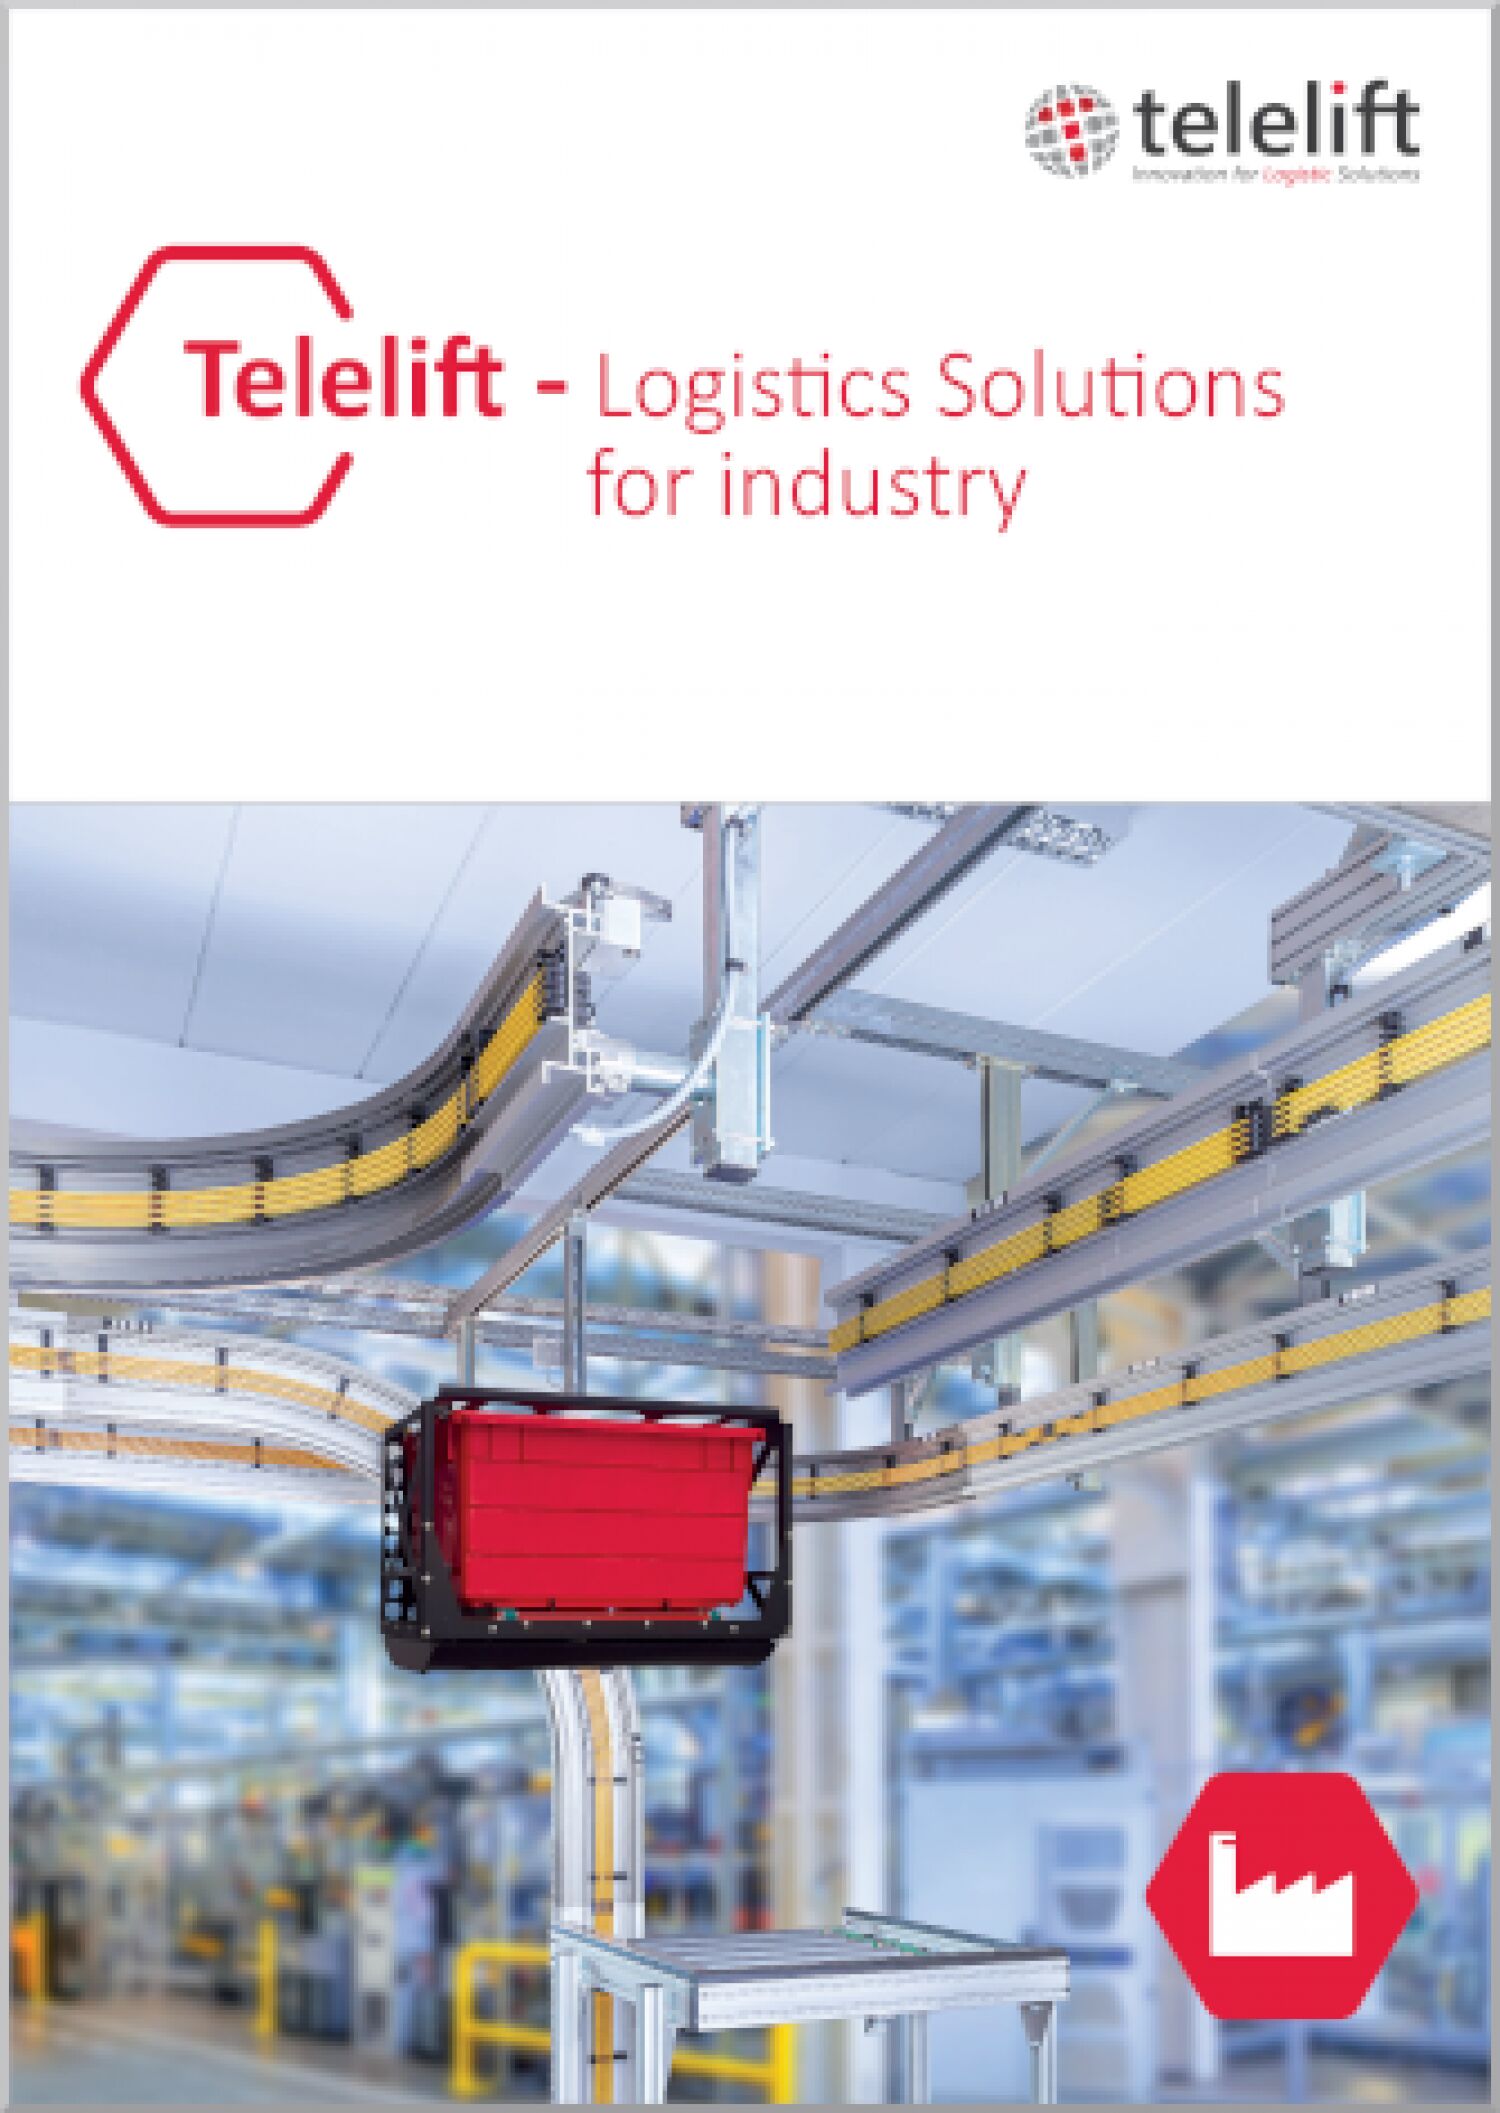 New Telelift Industry brochure!